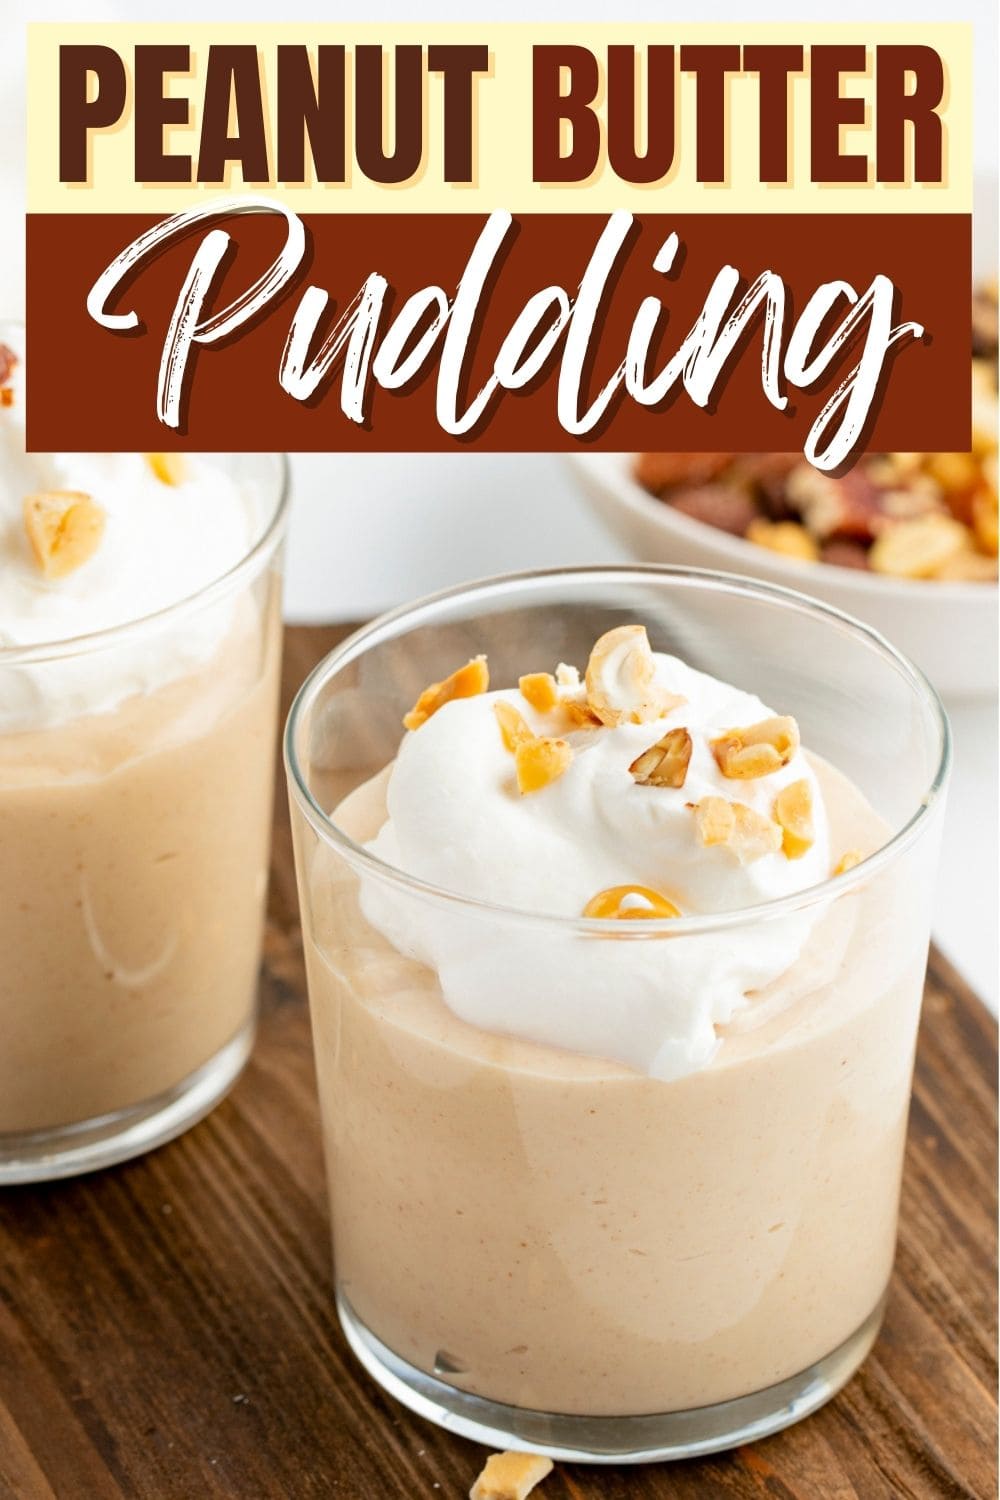 Peanut Butter Pudding